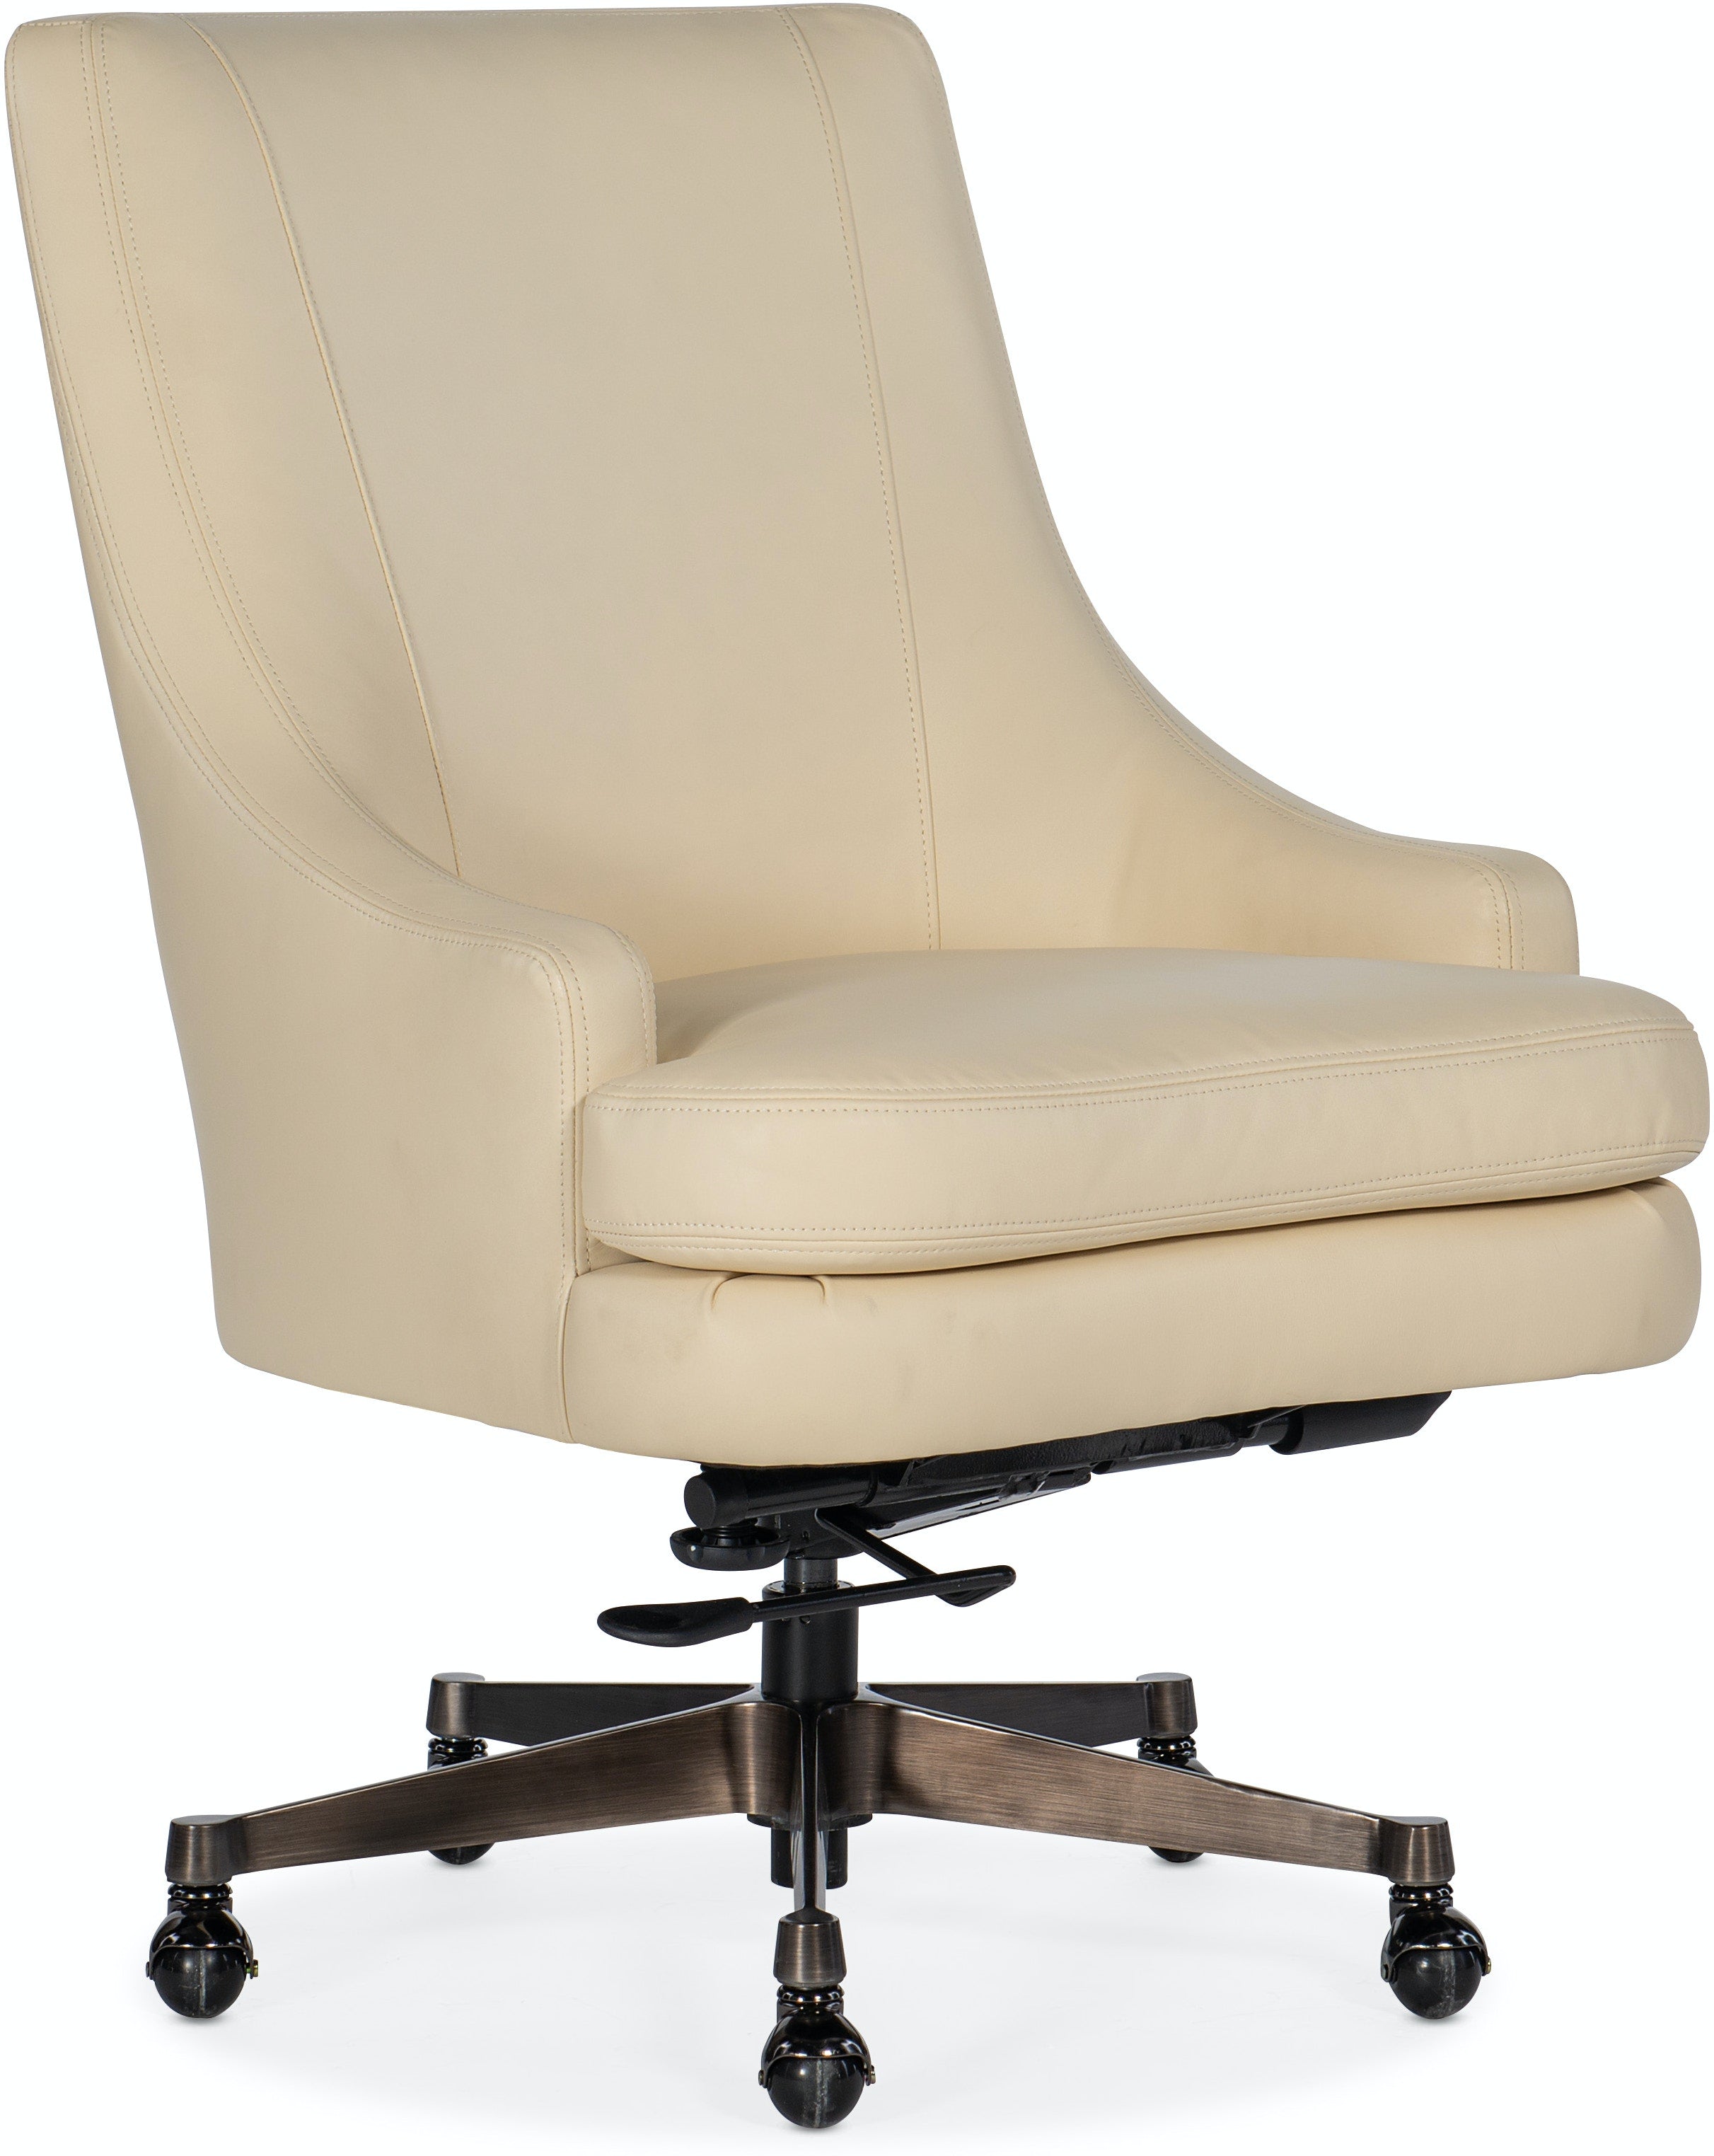 Hooker Furniture Paula Executive Swivel Tilt Chair in Jubilee Linen Leather